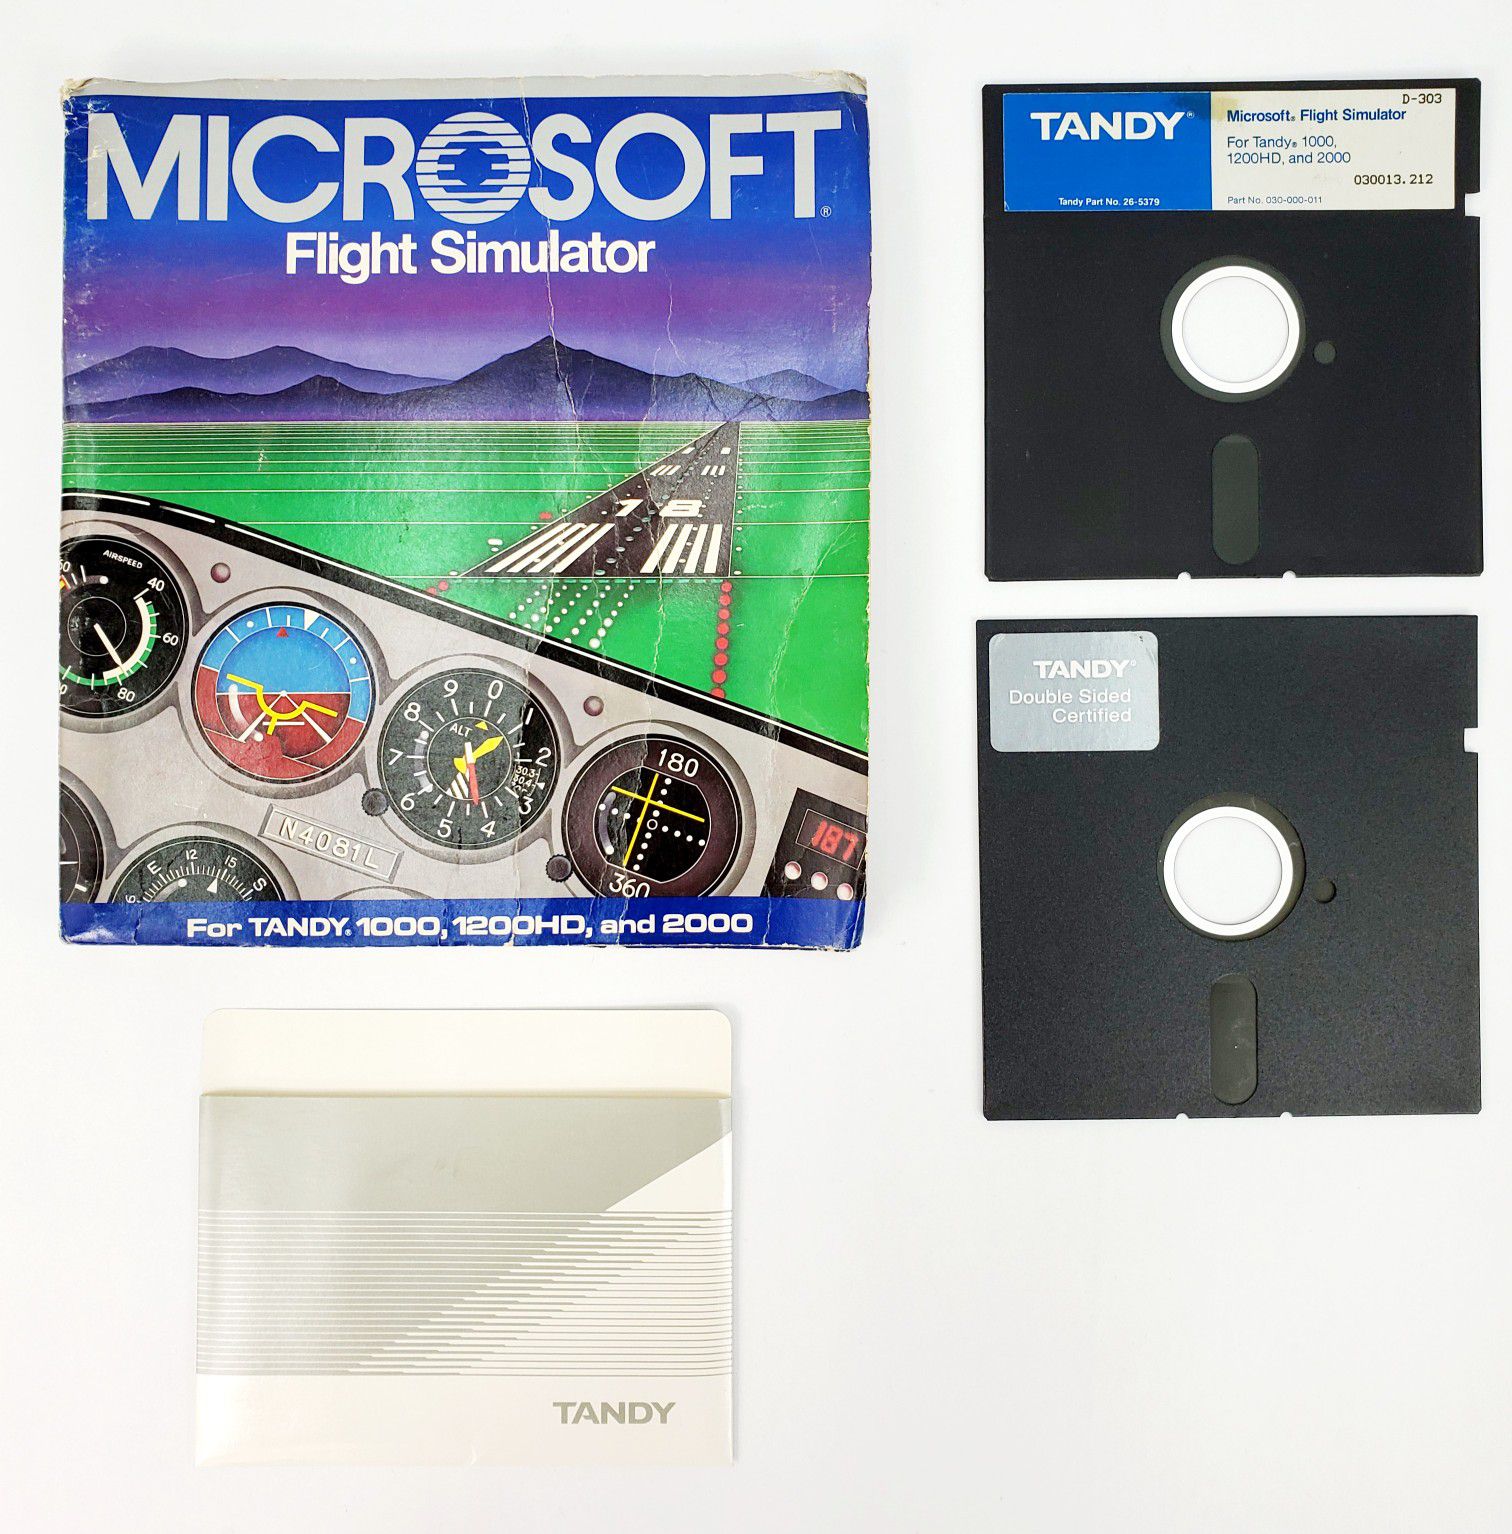 Vintage Microsoft Flight Simulator - 5.25" Floppy Disks, Manual etc. - IBM PC Tandy